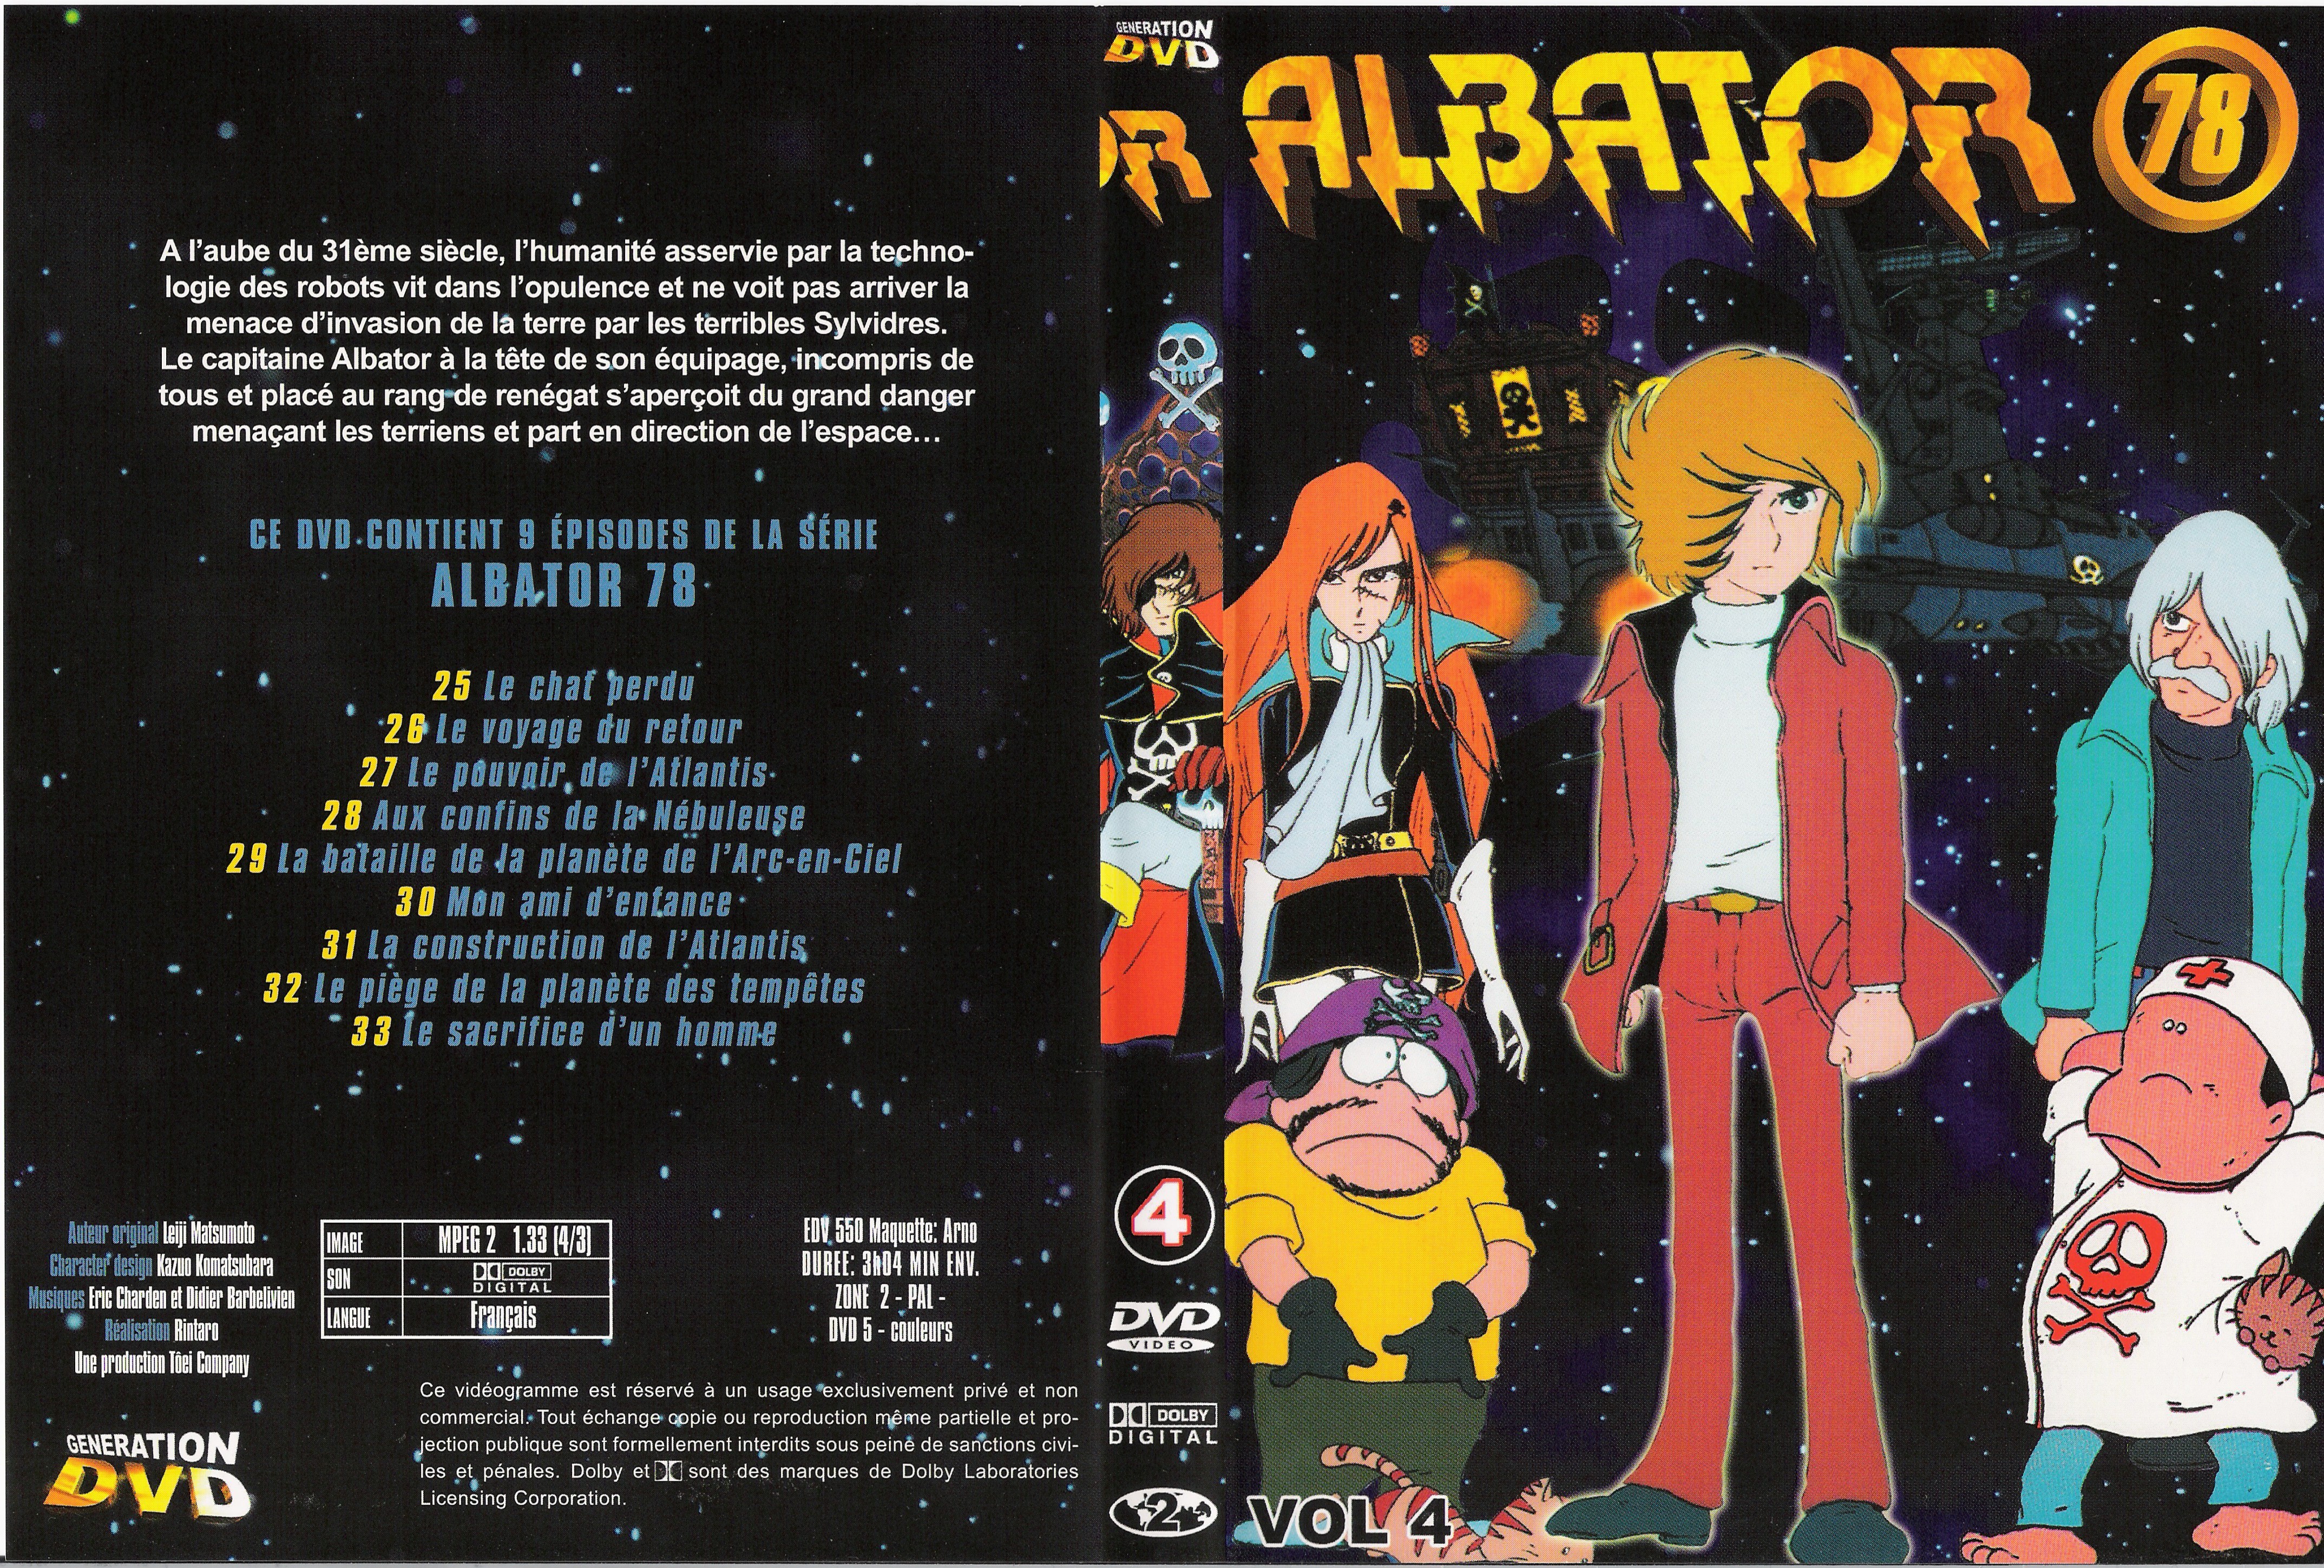 Jaquette DVD Albator 78 vol 4 (GENERATION DVD)